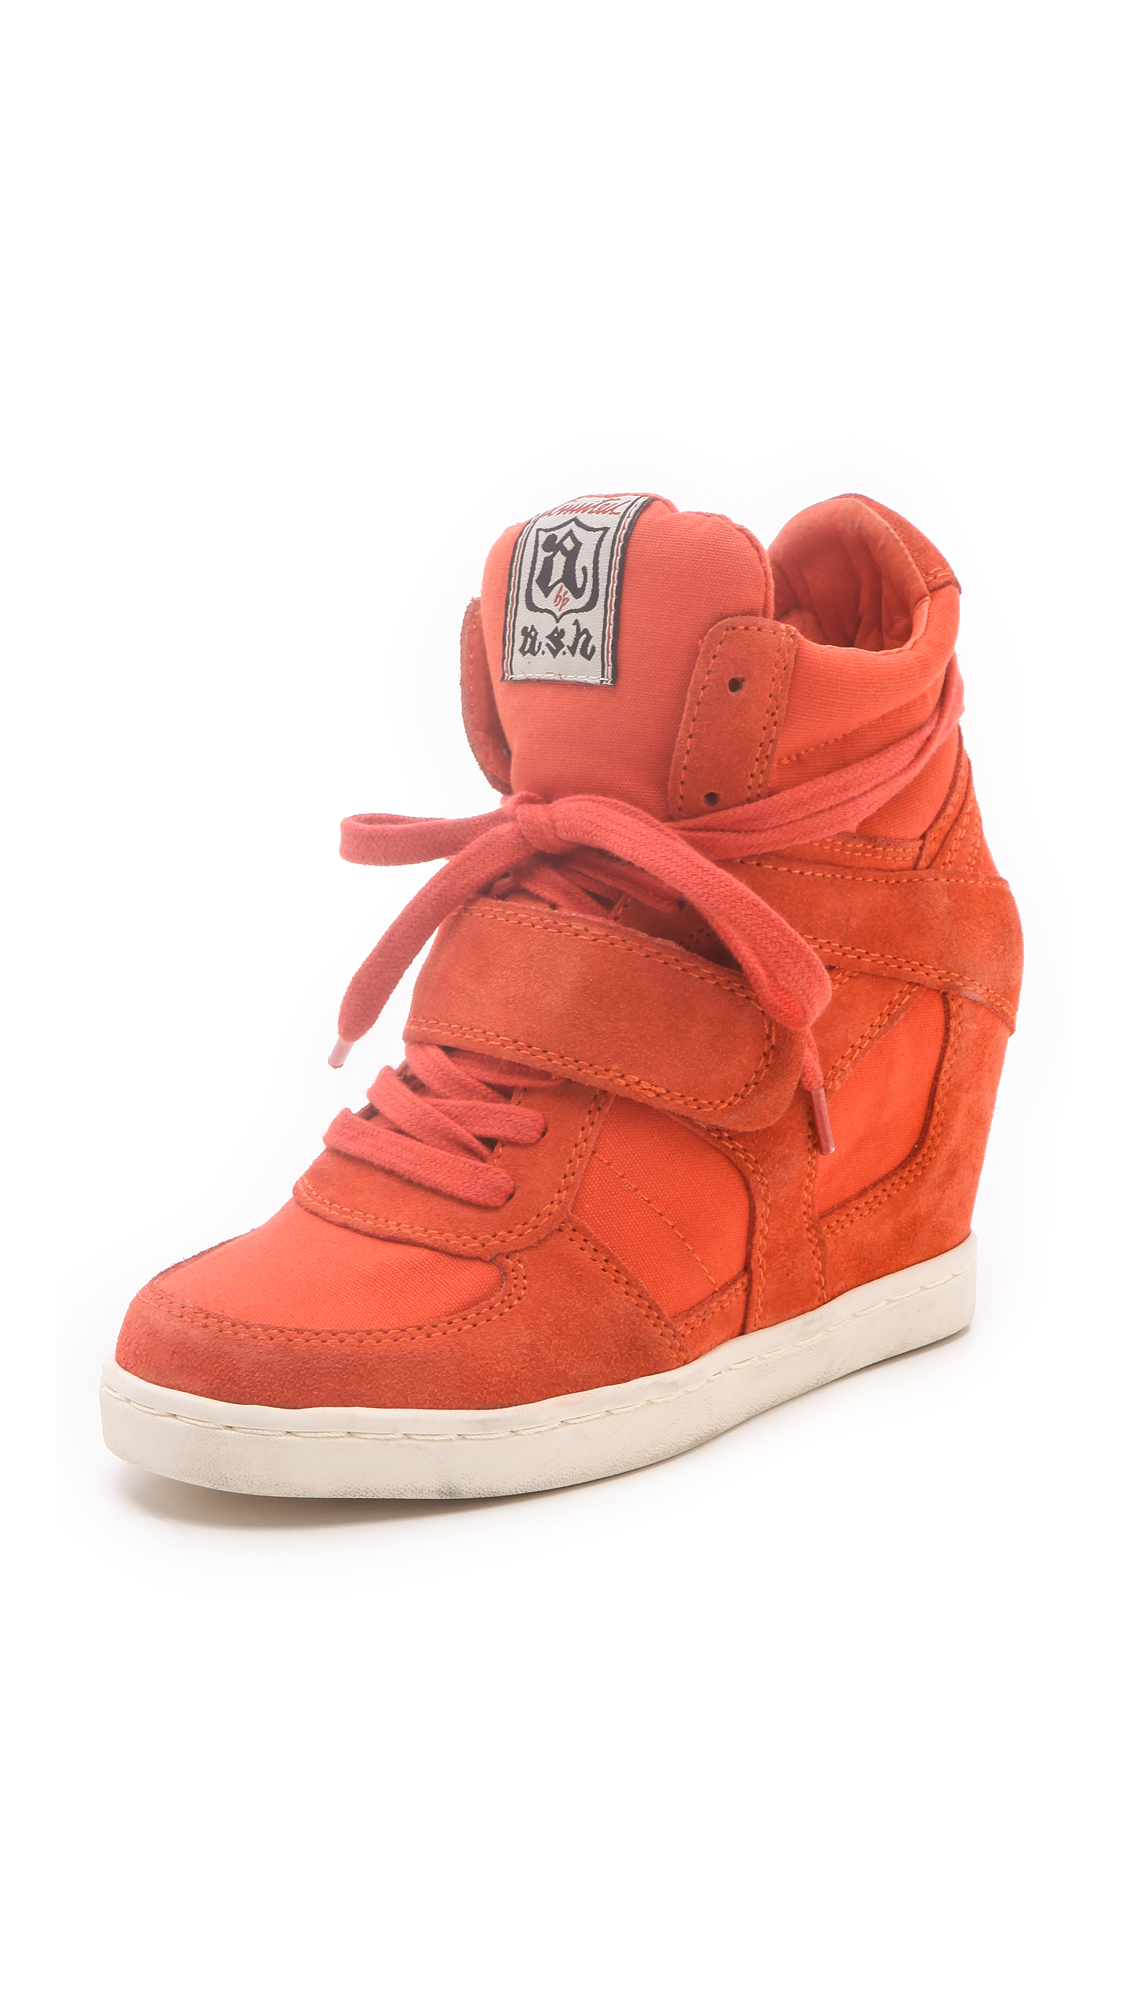 Ash Cool Suede Wedge Sneakers in Red (orange) | Lyst